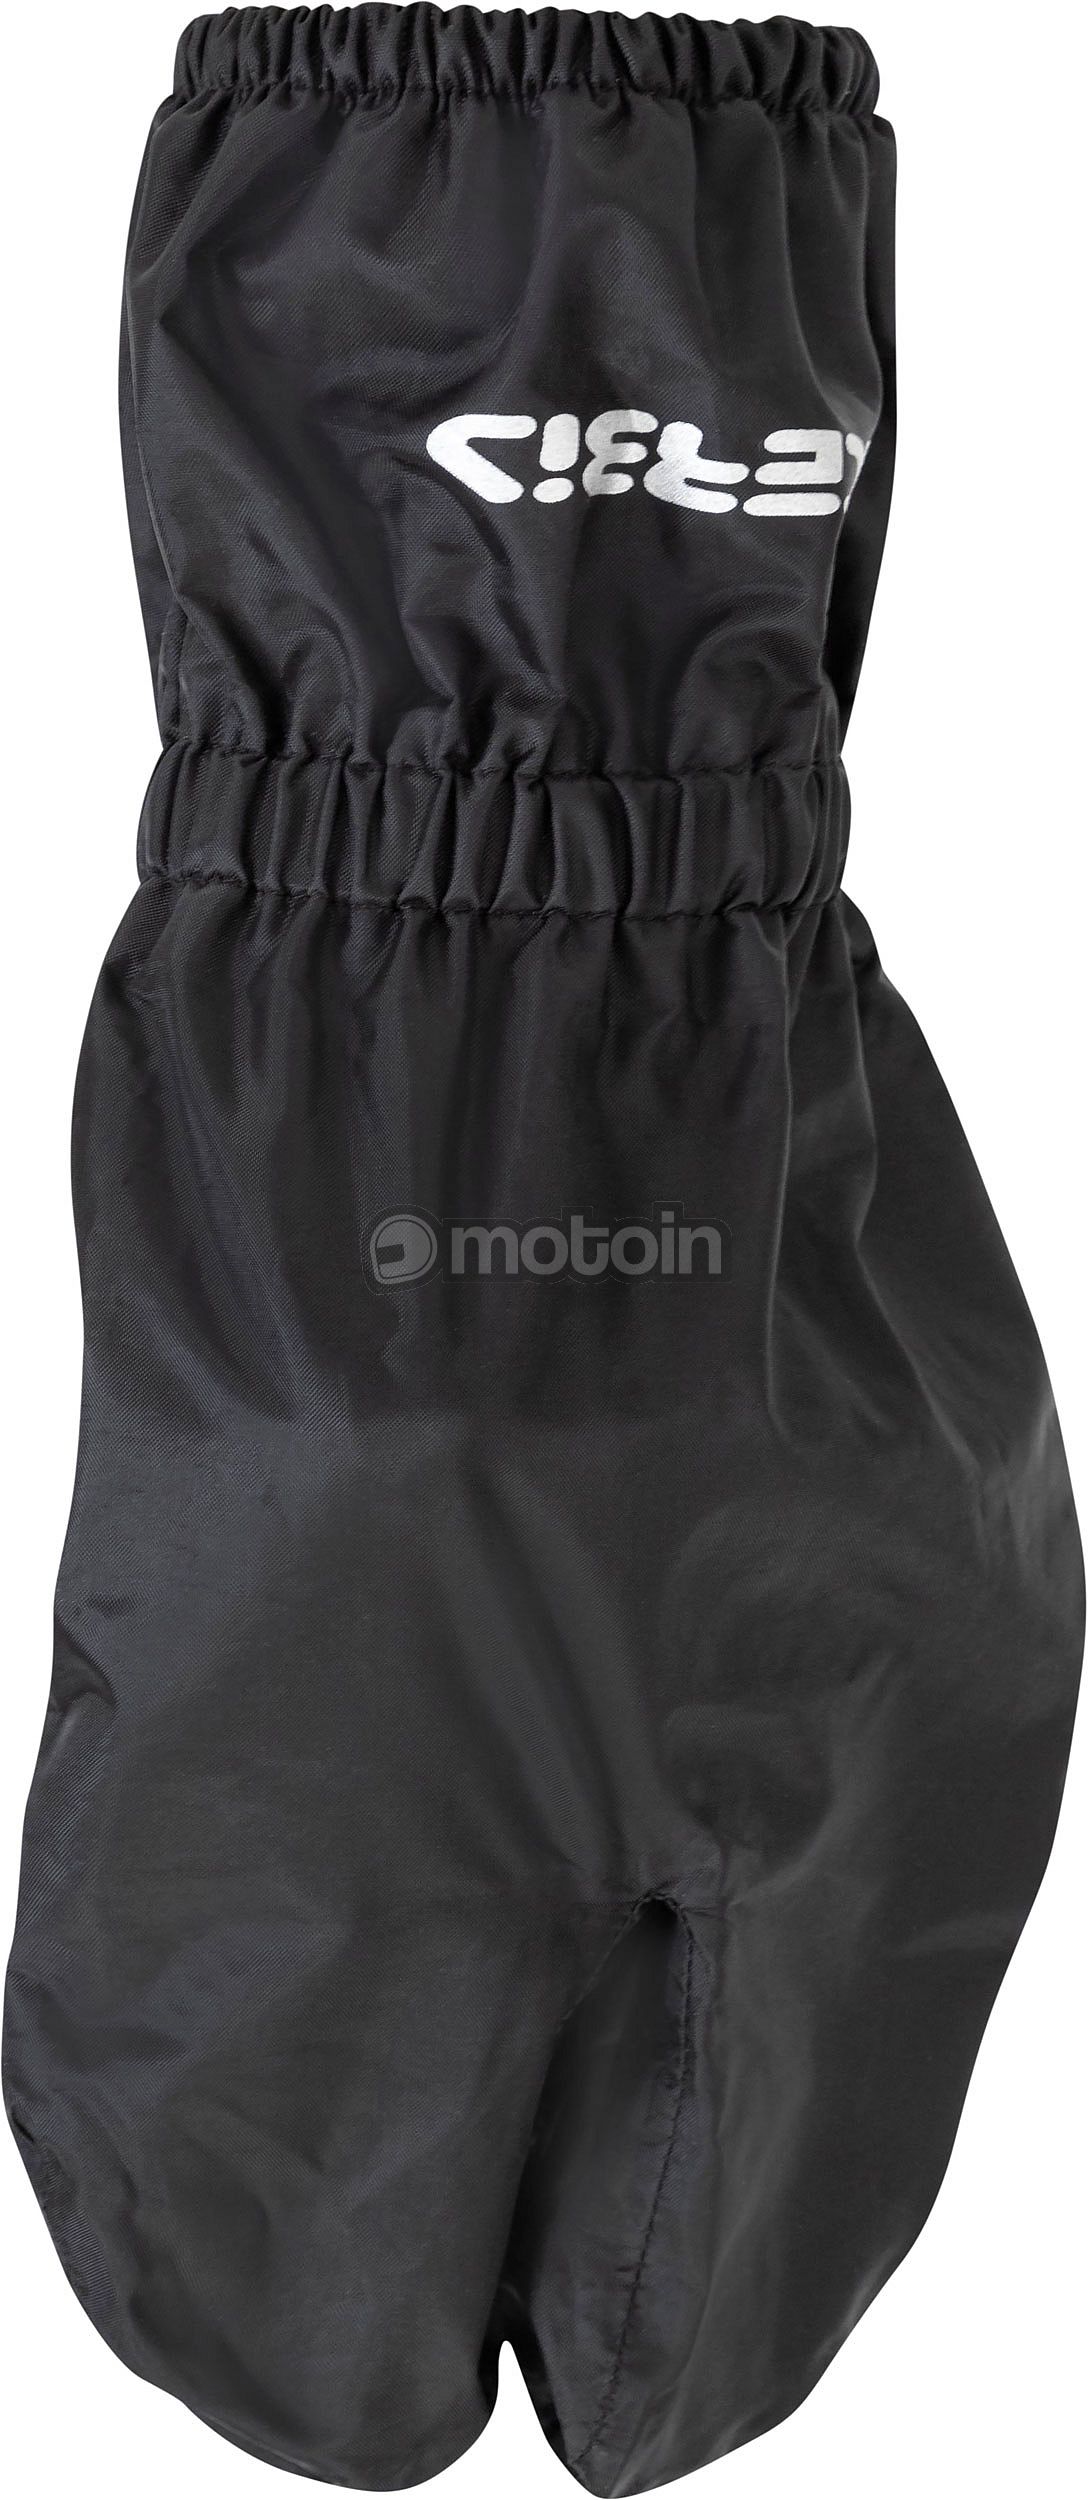 Acerbis Cover 4.0, over-gloves waterproof